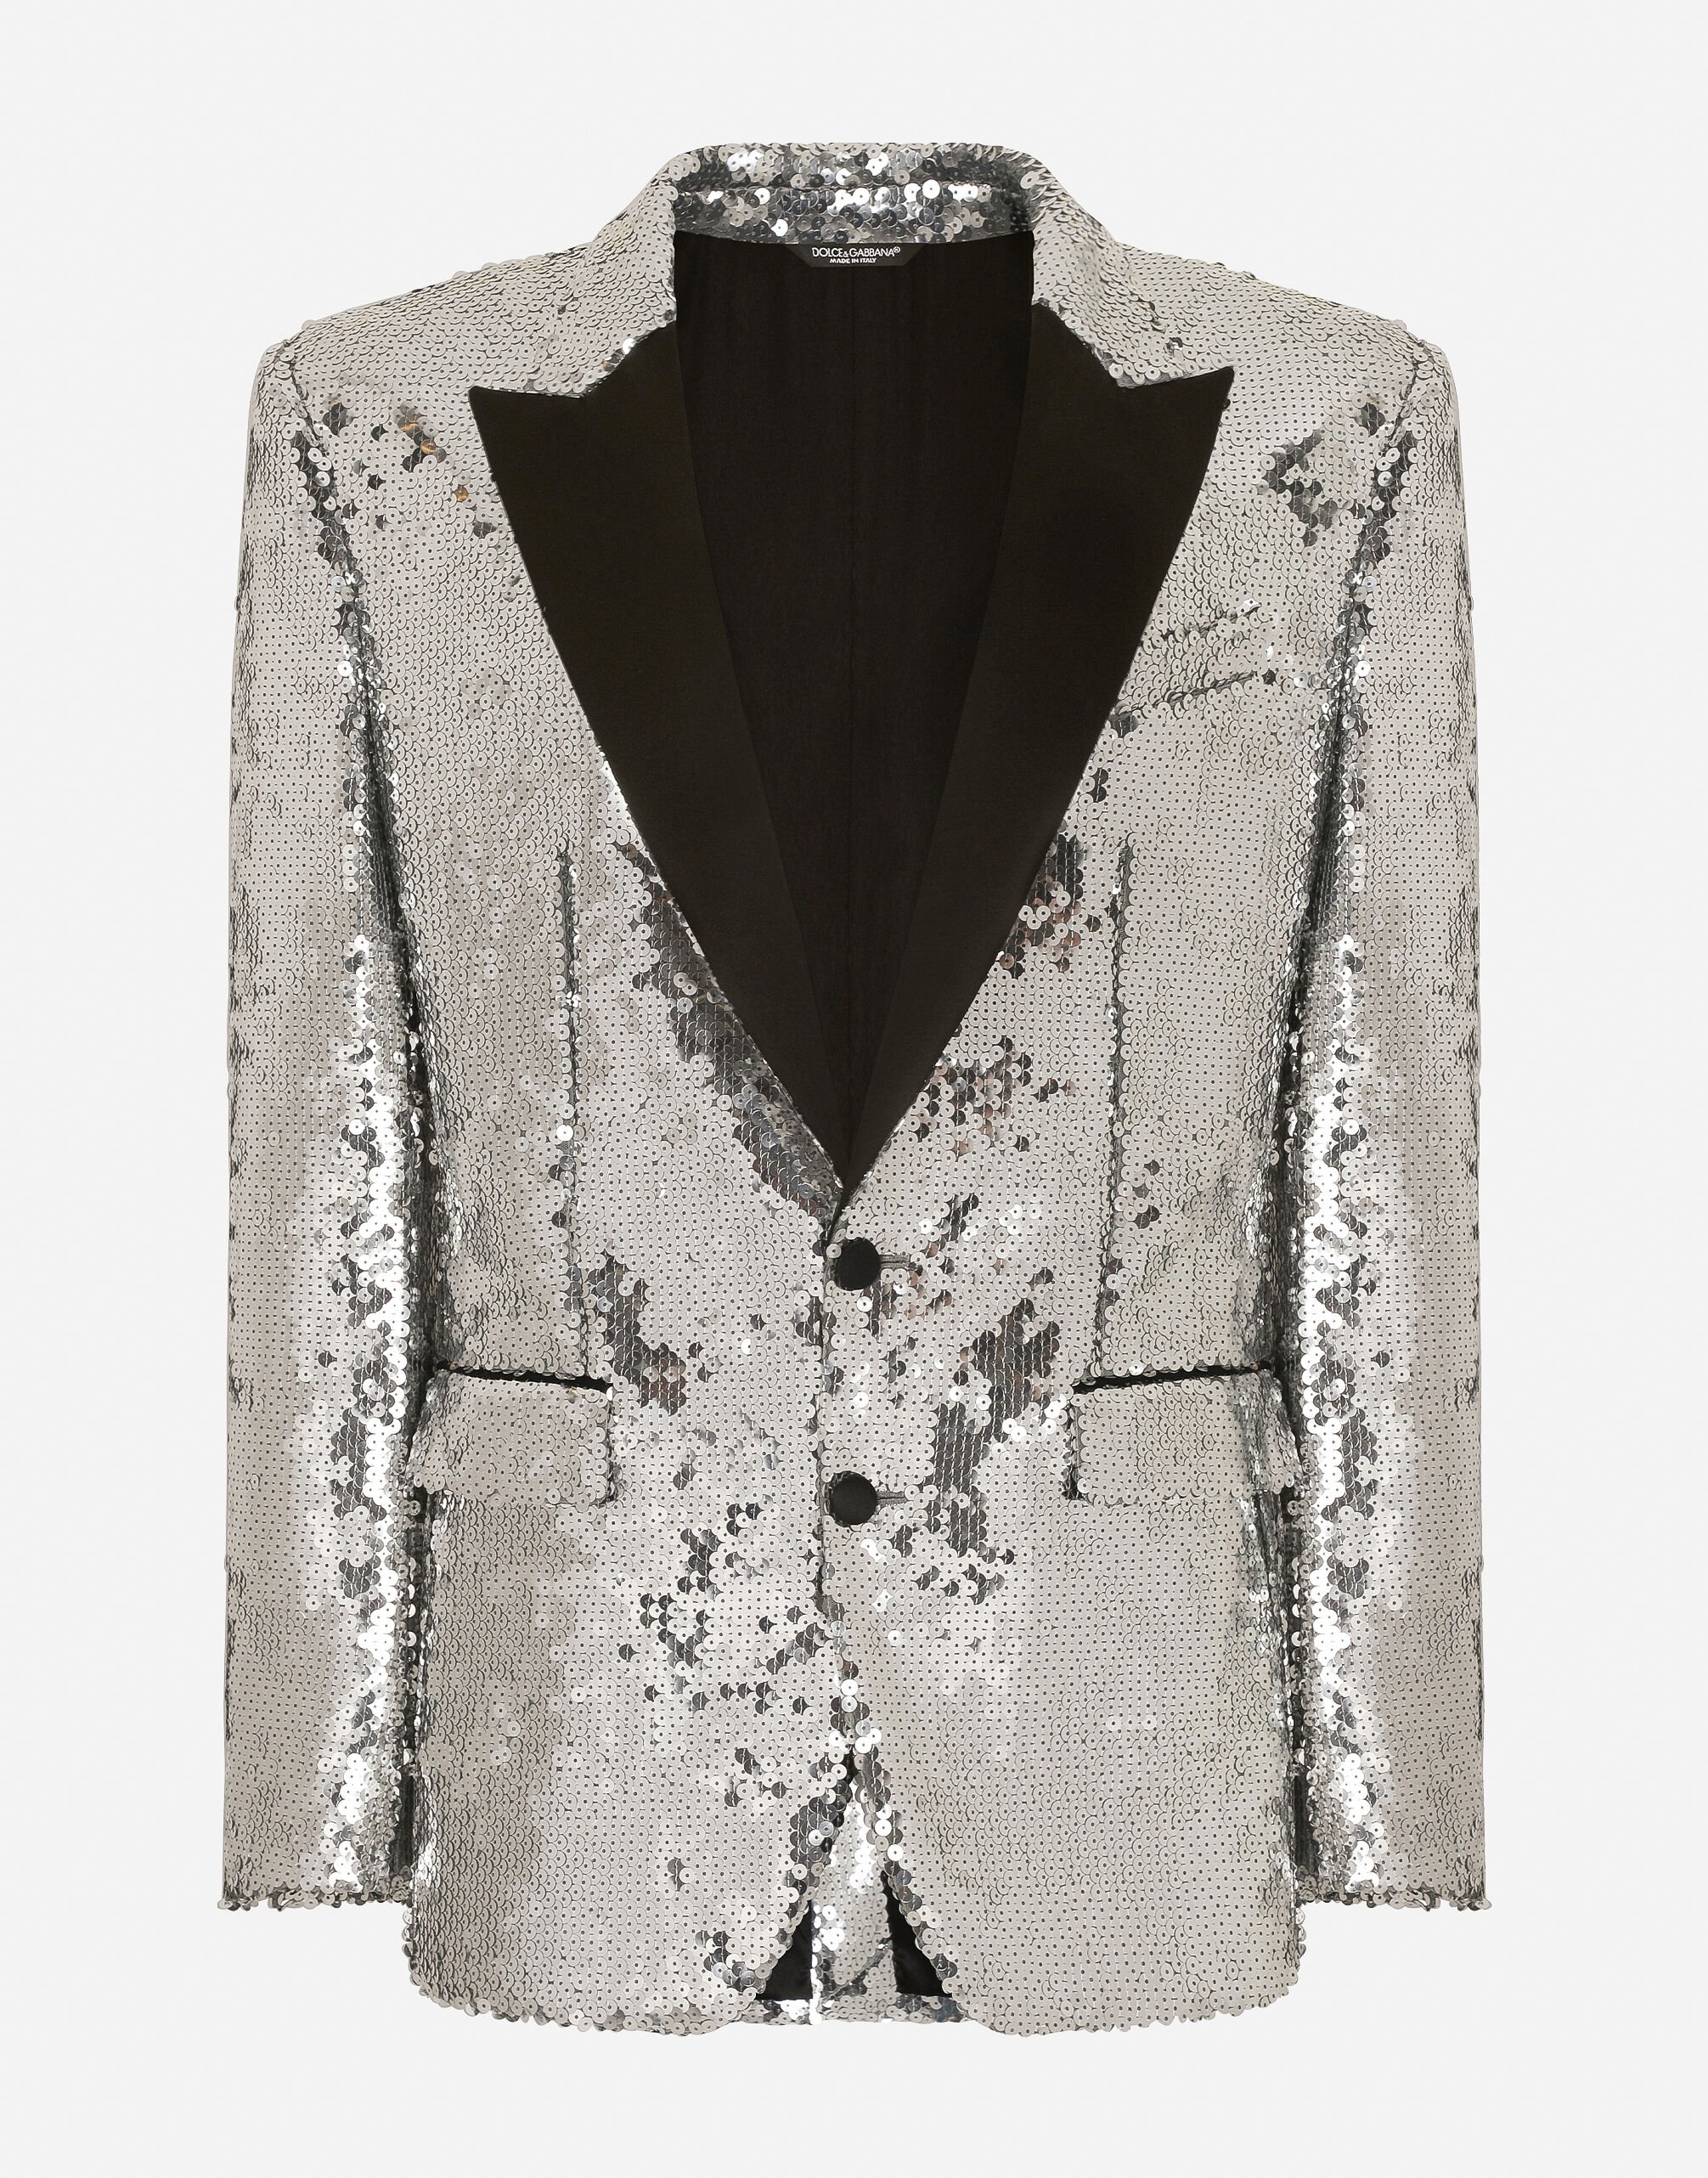 Dolce & Gabbana タキシードジャケット シチリアフィット シングルブレスト スパンコール シルバー G2QU6TFLSEP